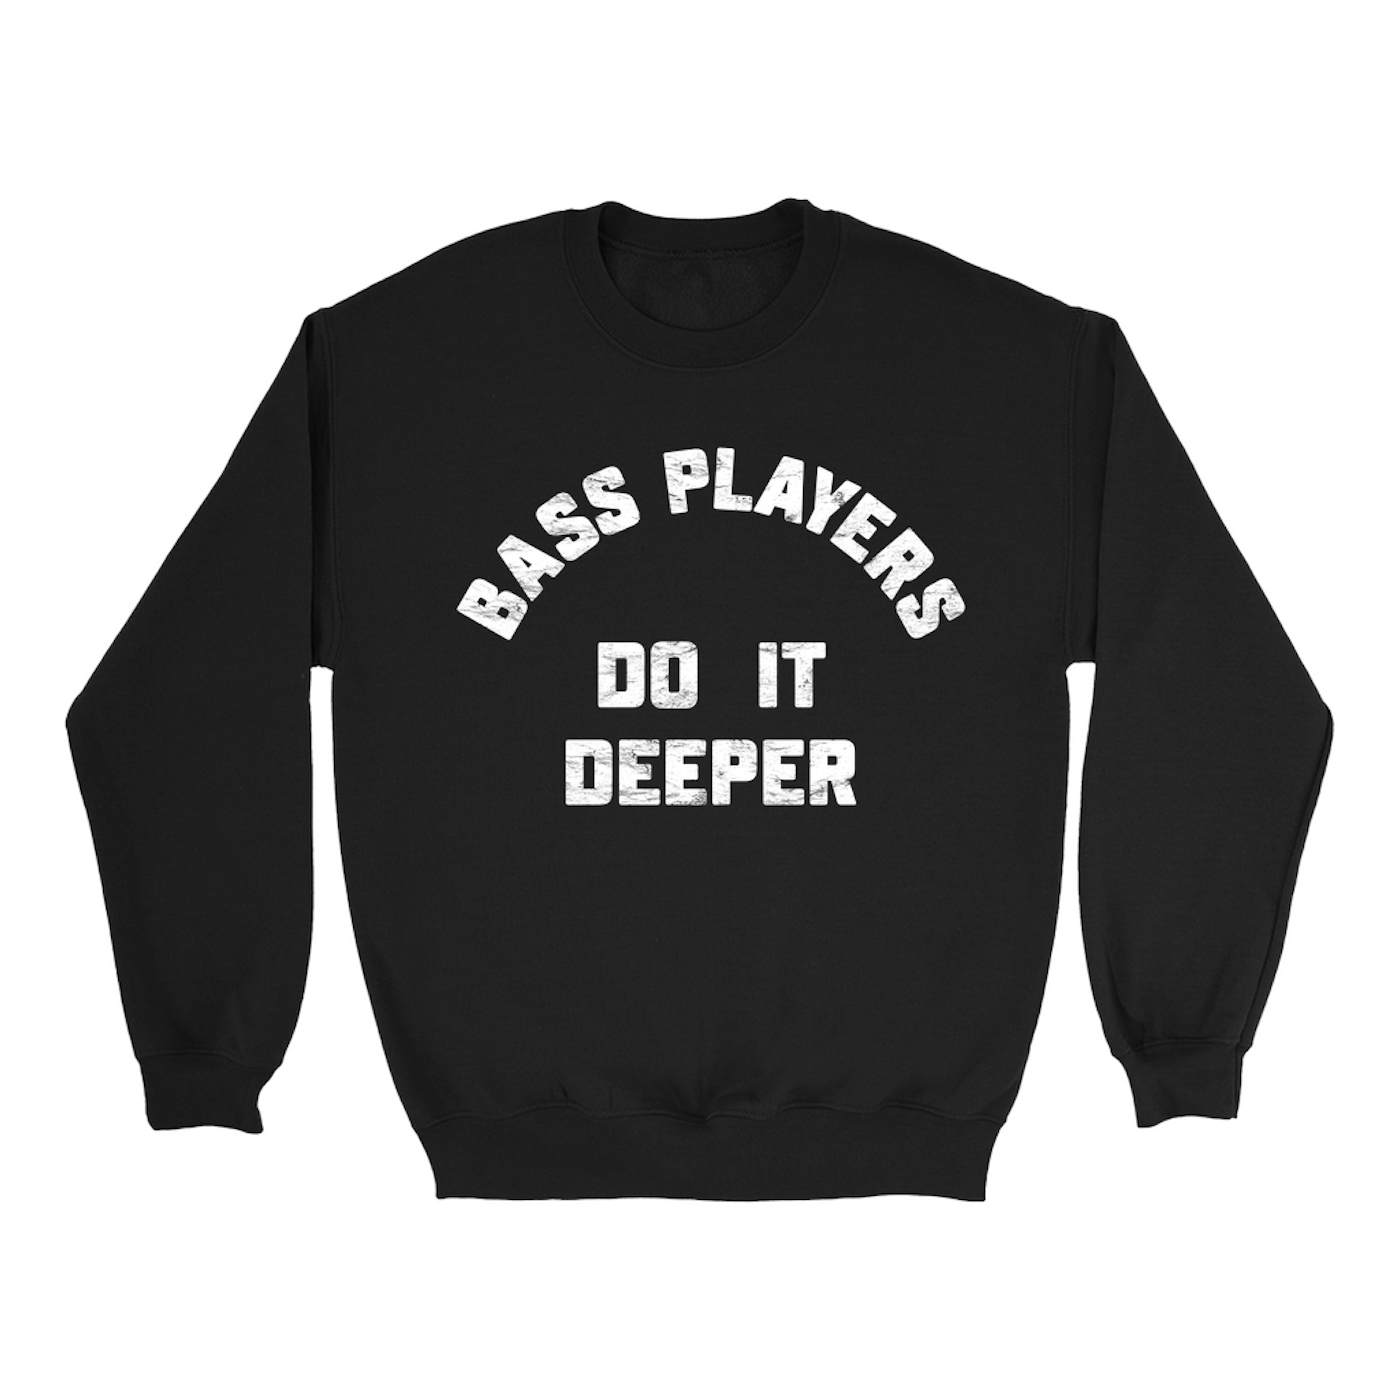 Def Leppard Sweatshirt | Bass Players Do It Worn By Rick Savage Def Leppard Sweatshirt